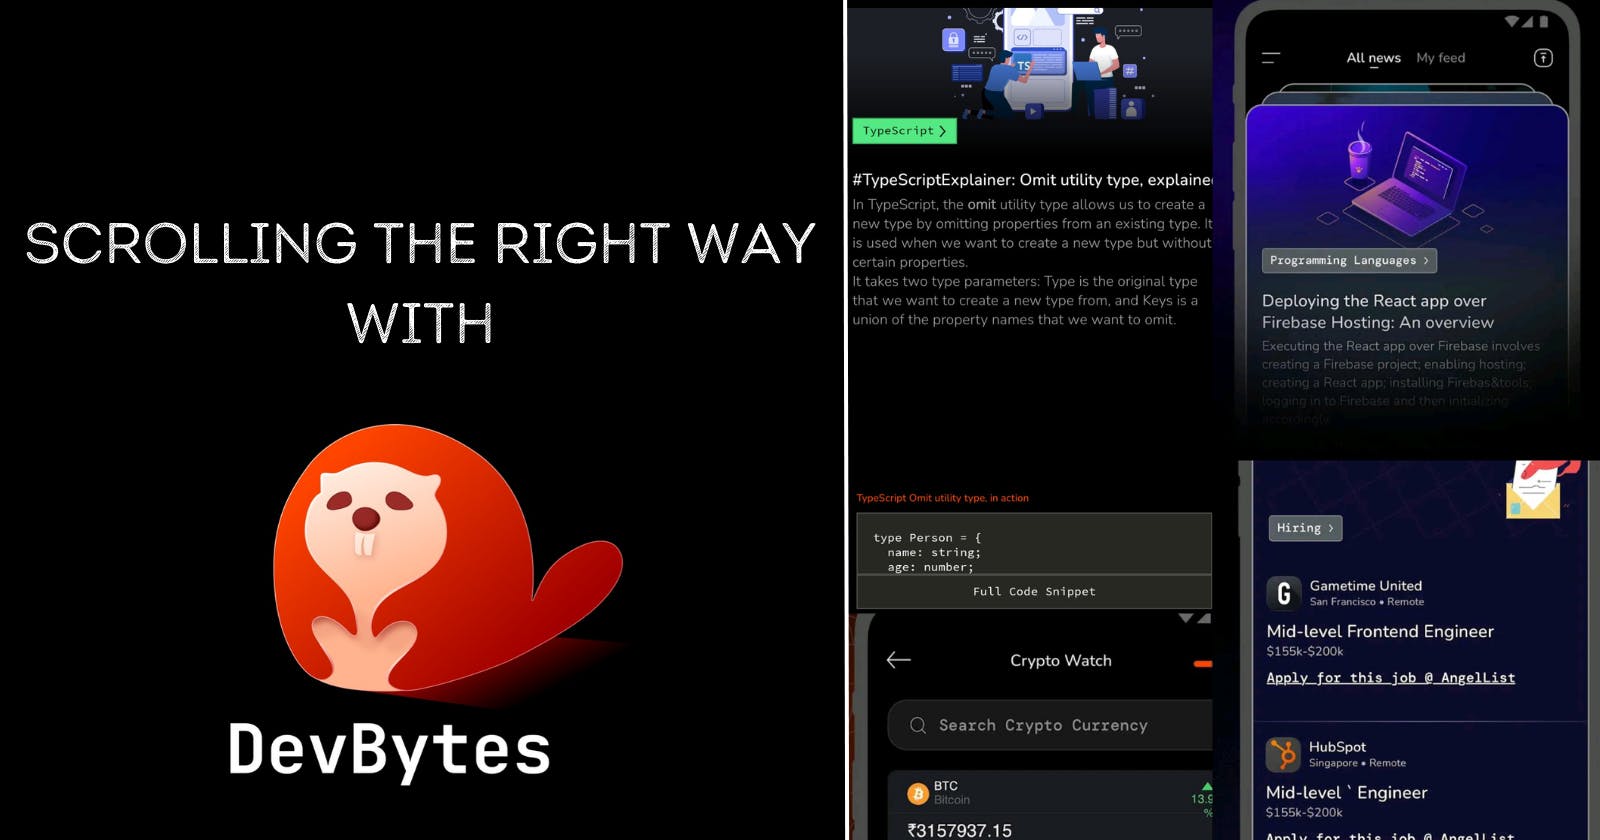 DevBytes - Scrolling the better way